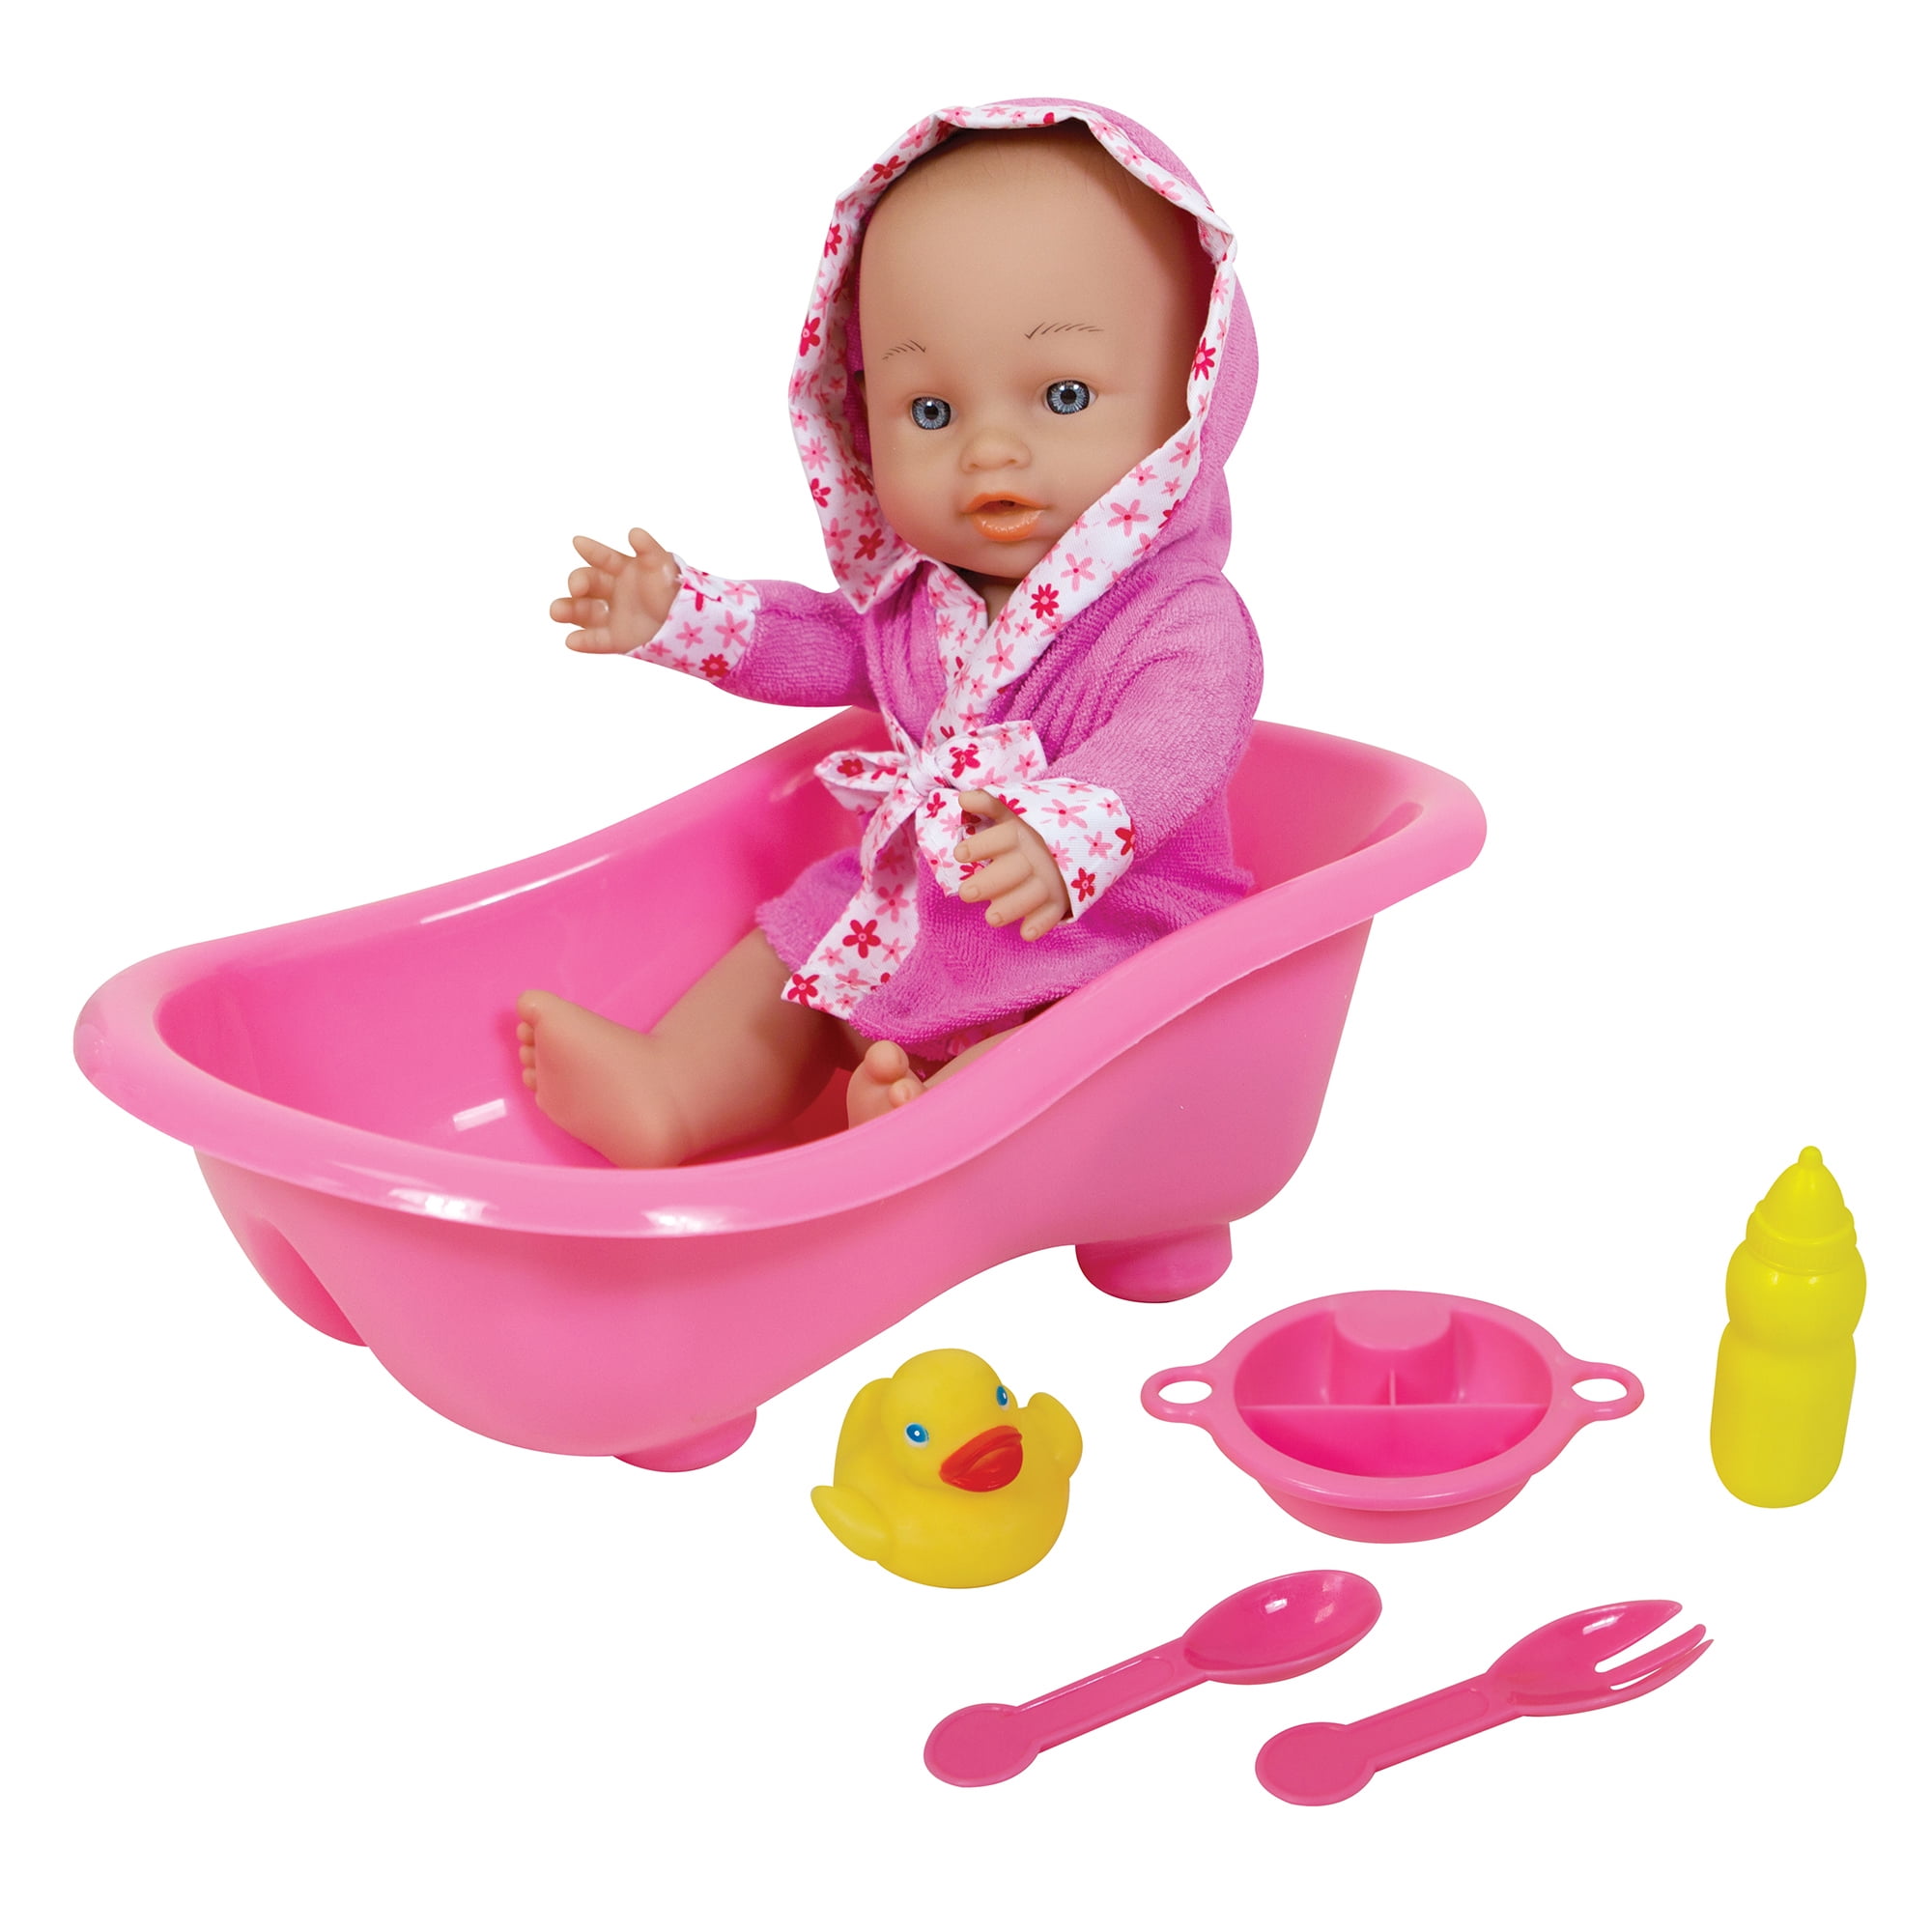 Lissi Doll - Baby with Bathtub - Walmart.com - Walmart.com